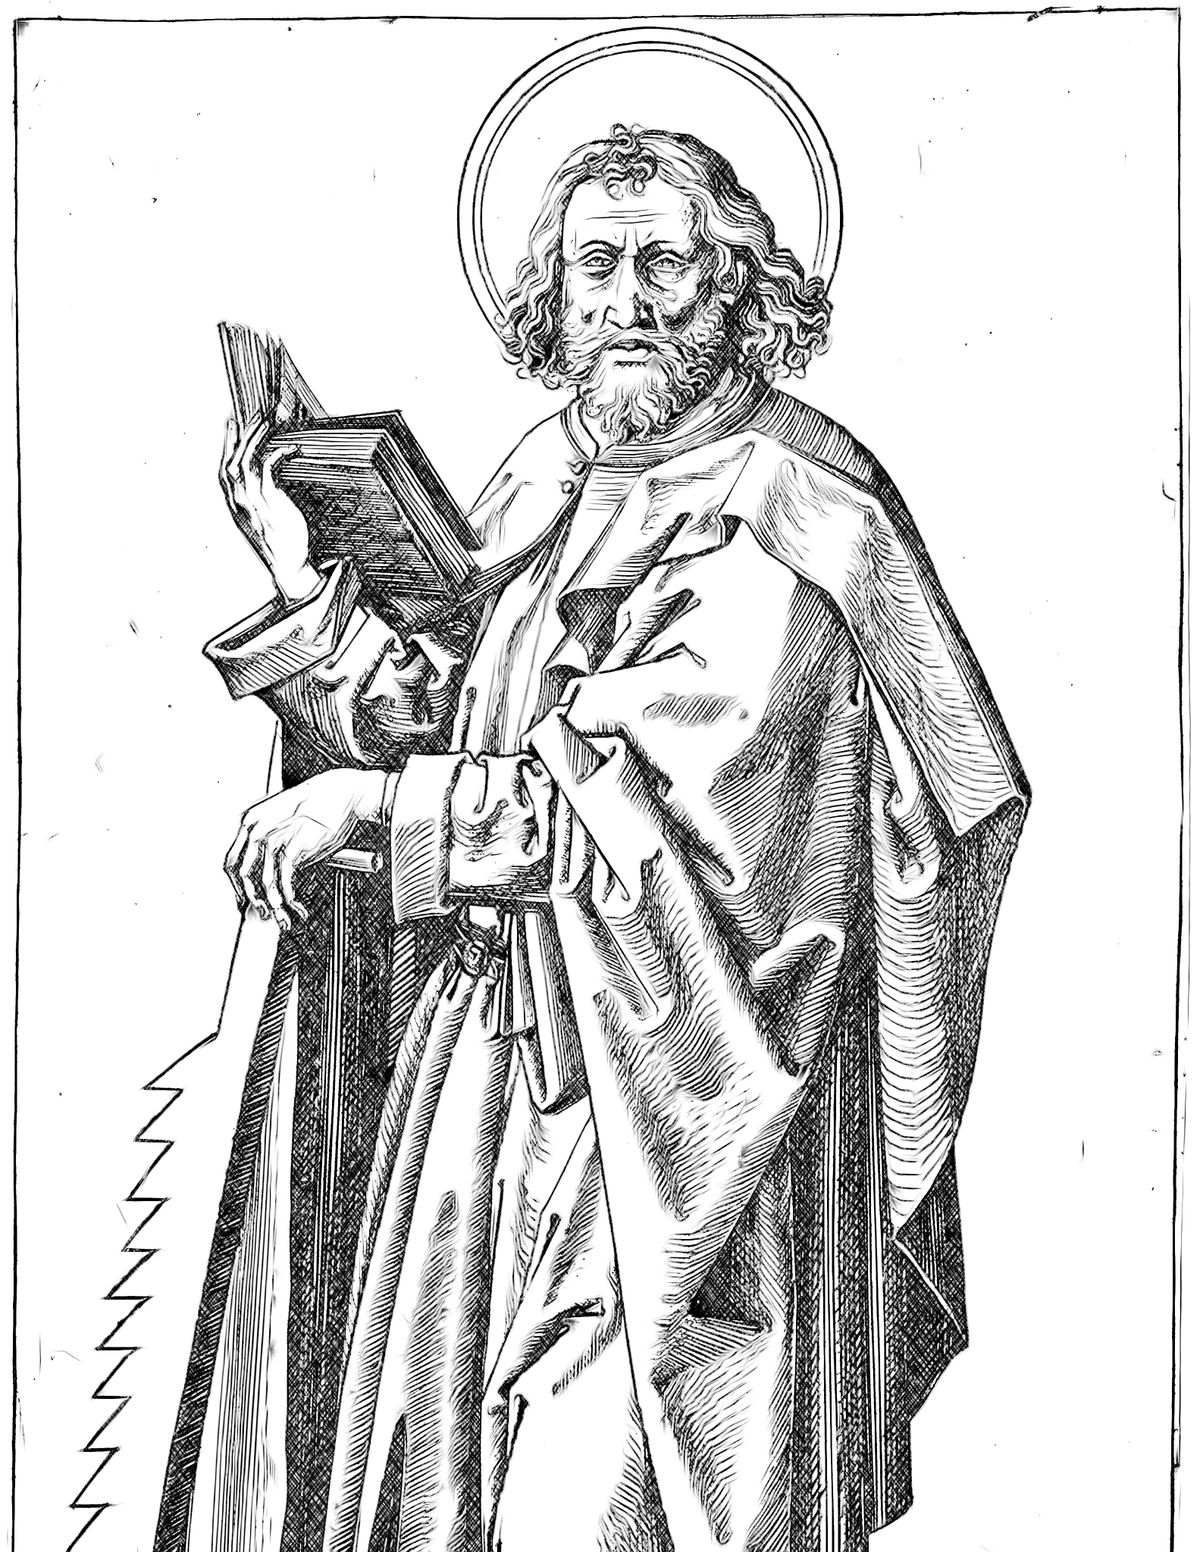 Saint Simon the Zealot - Catholic Coloring Page